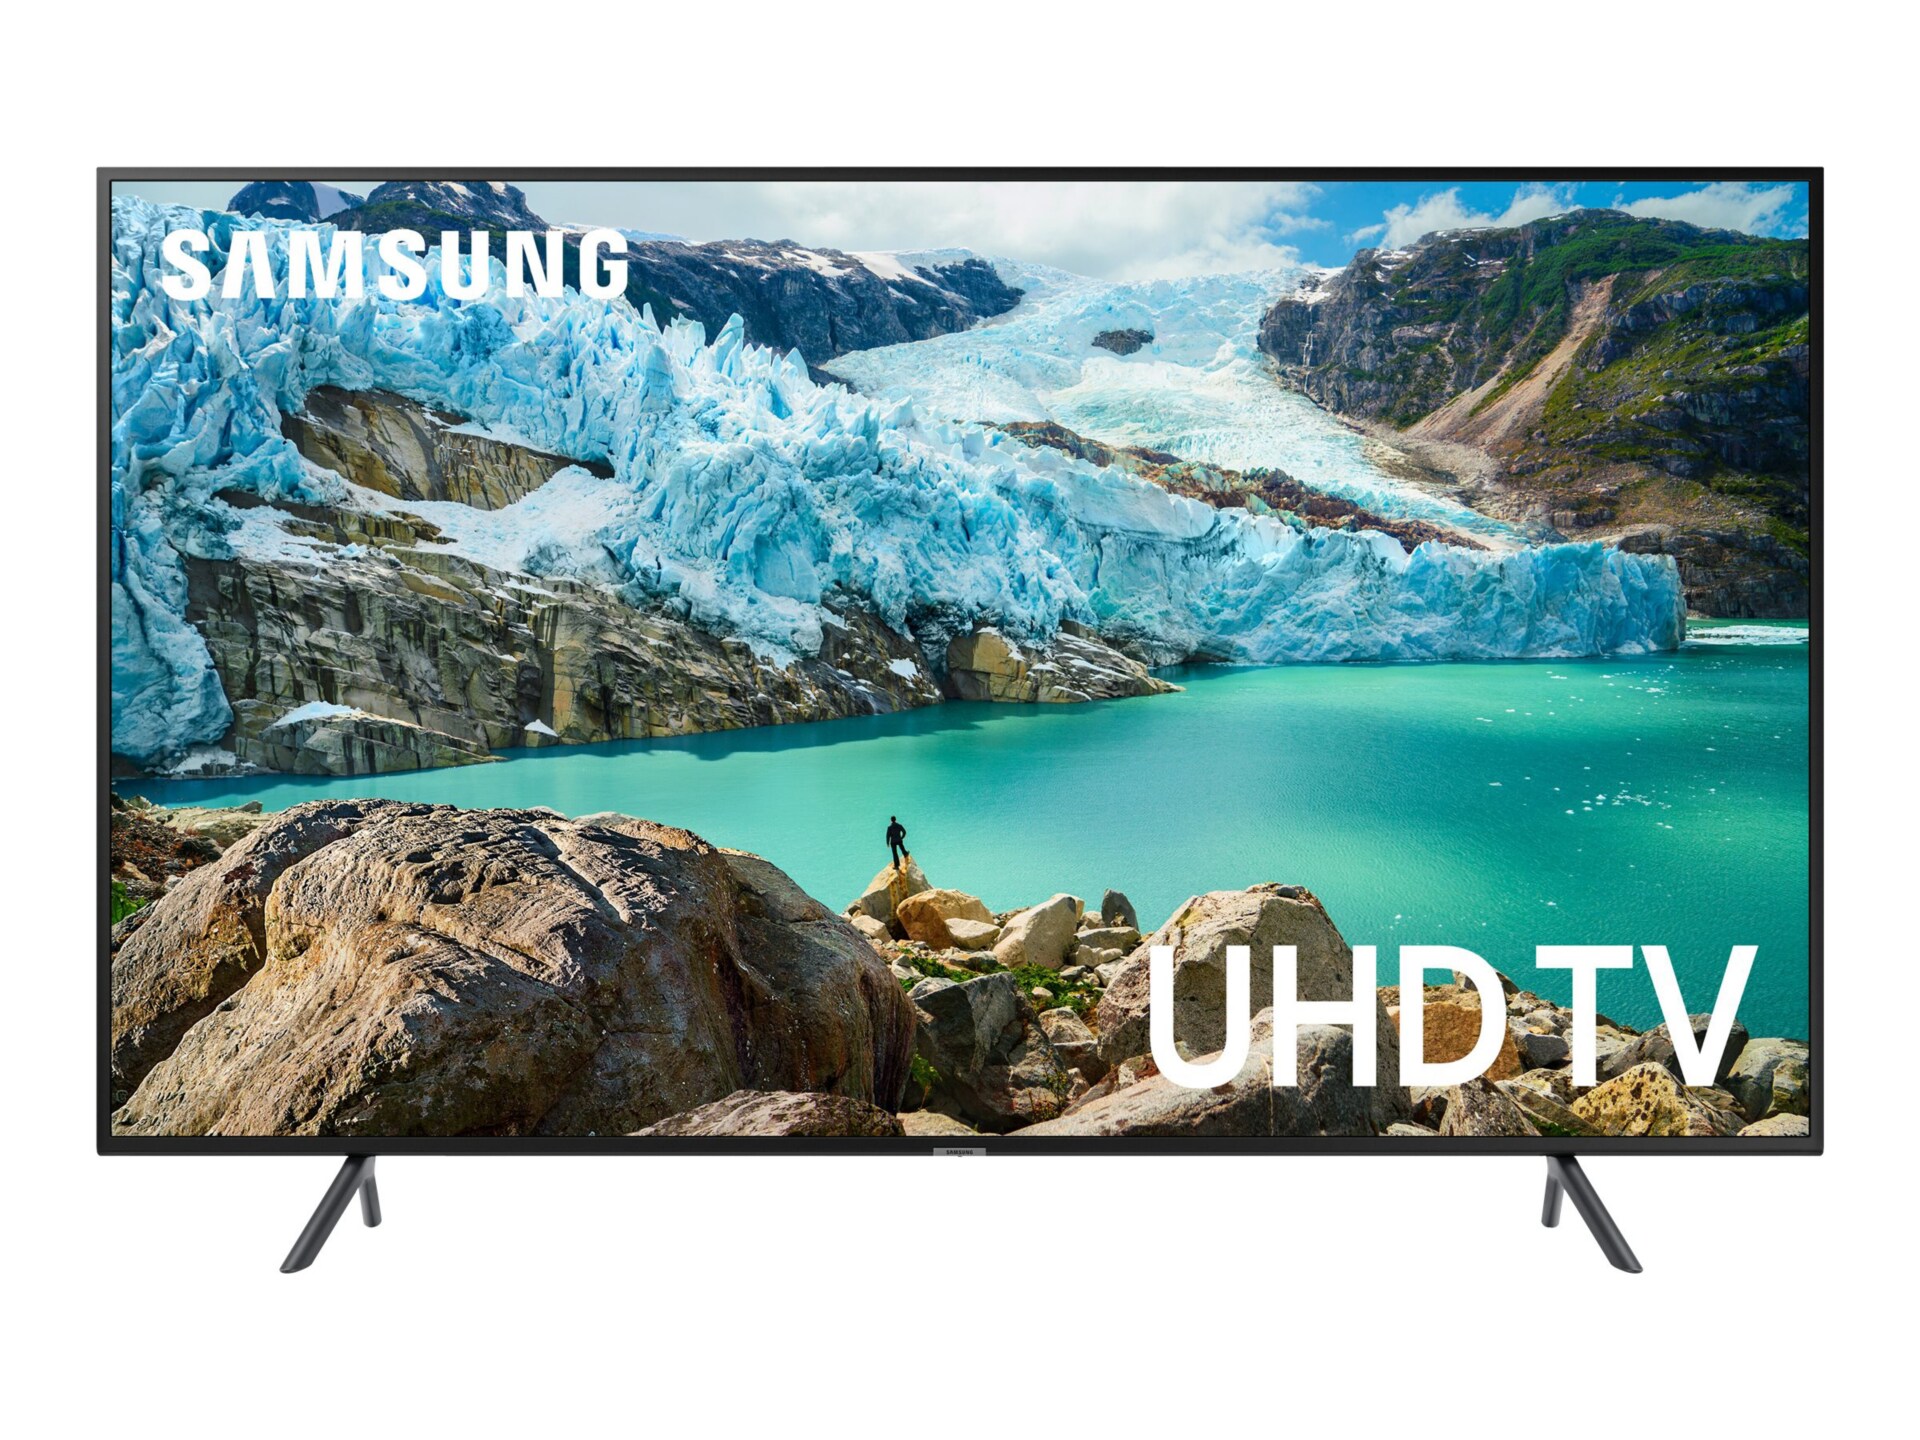 Samsung UN65RU7100F 7 Series - 65" Class (64.5" viewable) LED TV